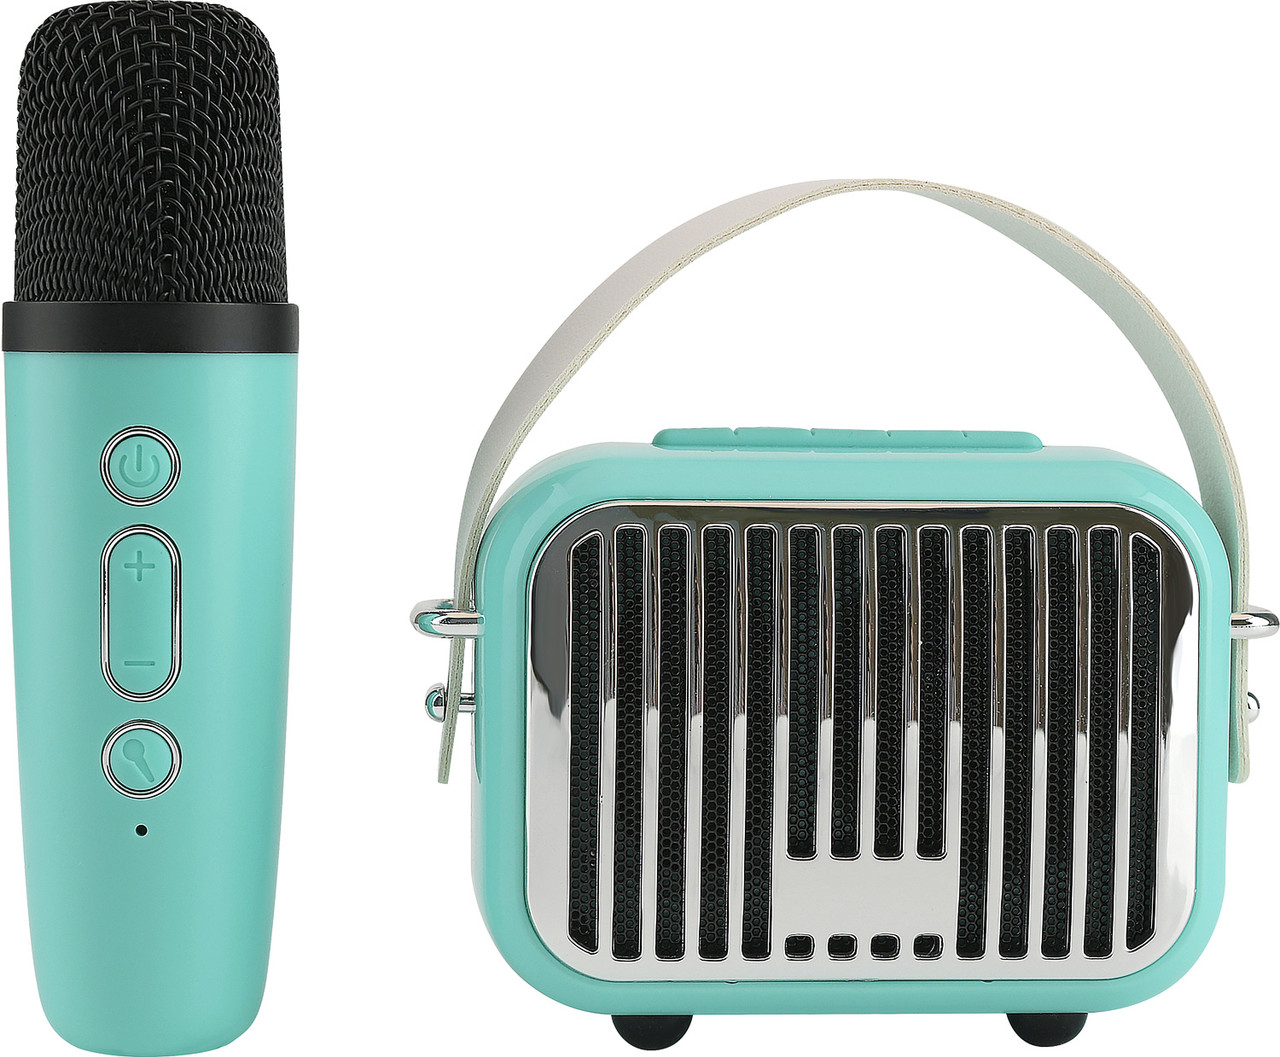 Pocket Karaoke Speaker and Microphone Combo - Teal Edition 1